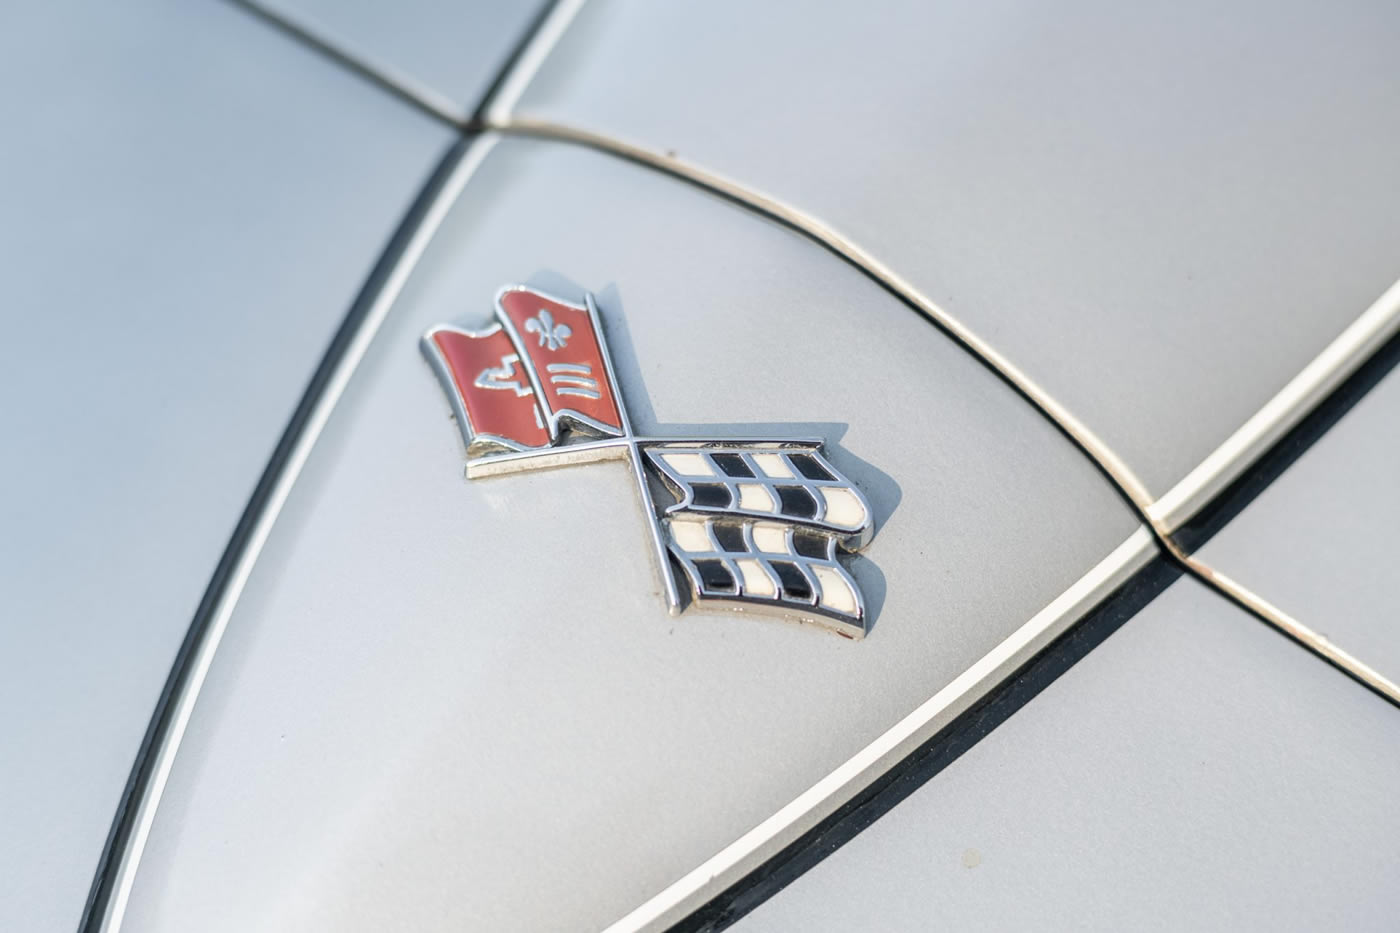 1967 Corvette Coupe L75 327/300 4-Speed in Silver Pearl